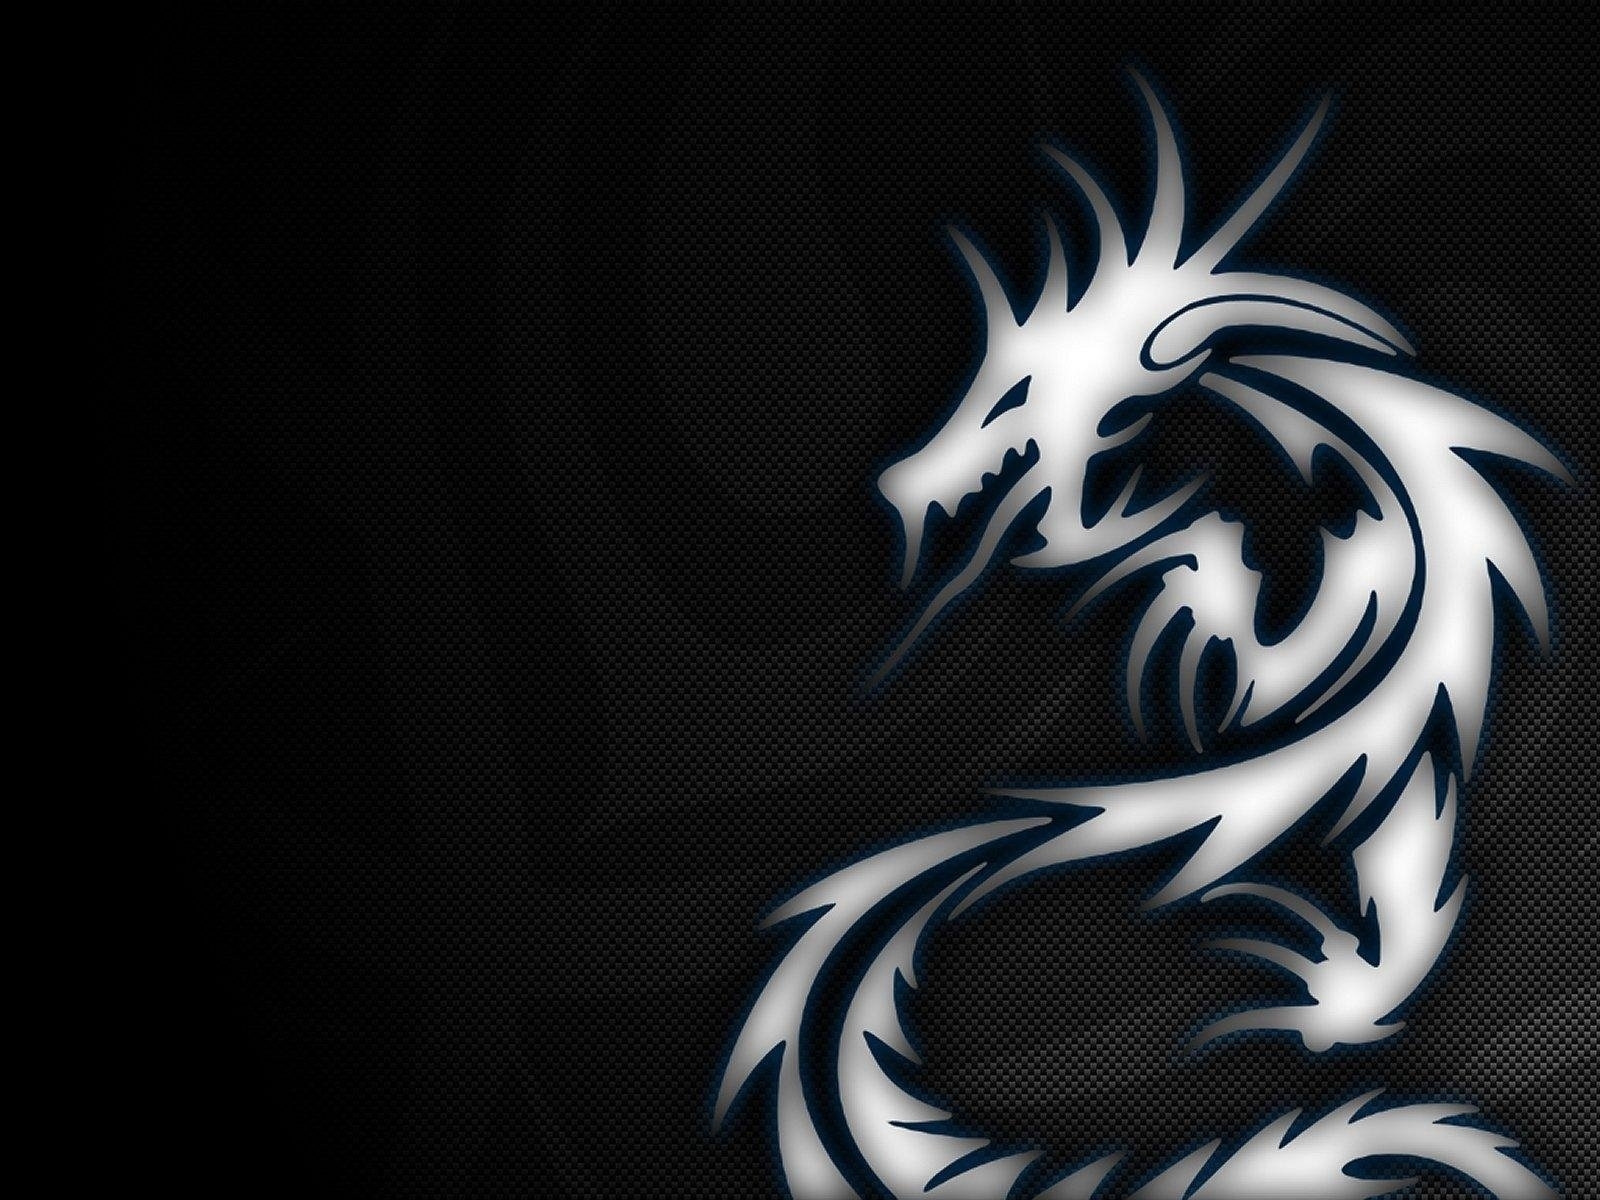 10 Most Popular Black Dragon Wallpaper Hd FULL HD 1080p For PC